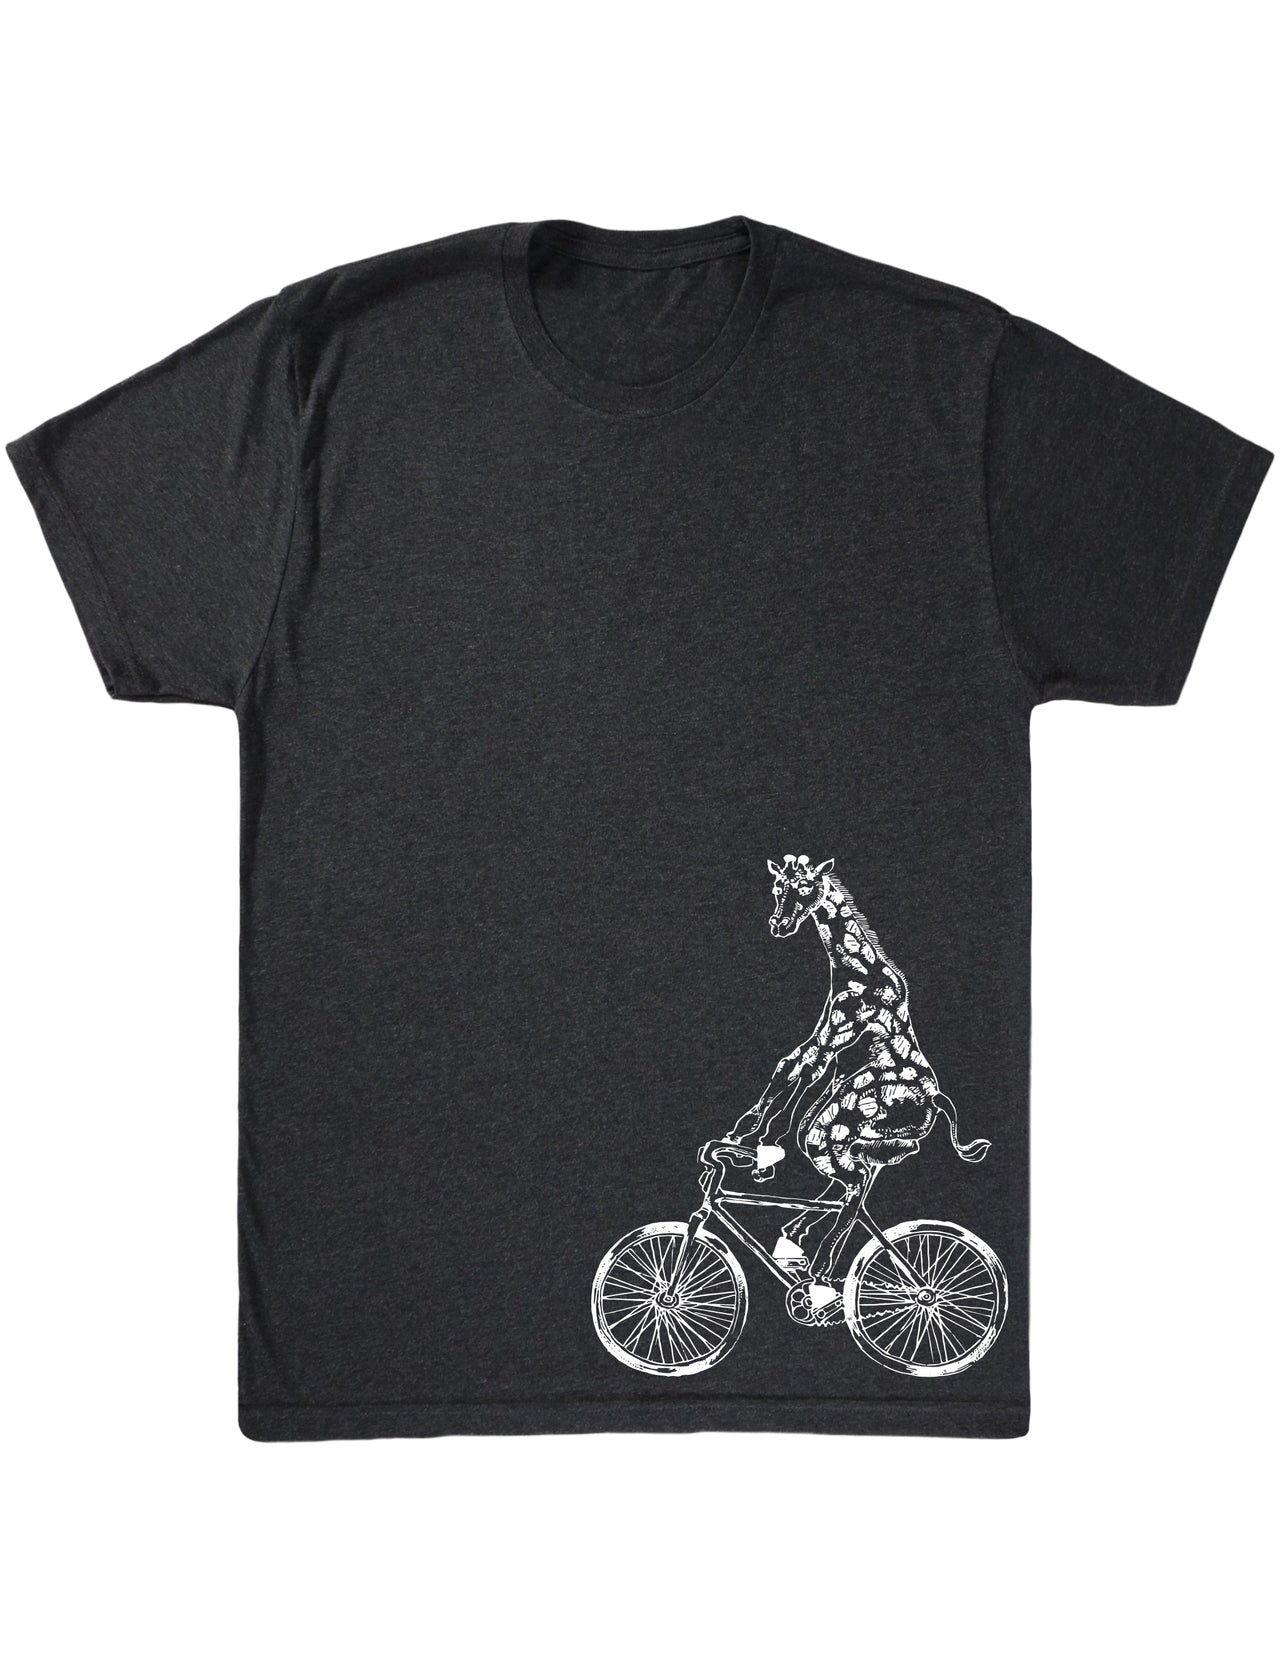 seembo-giraffe-cycling-bicycle-bike-design-on-it-vintage-black-t-shirt-ptinted-on-side